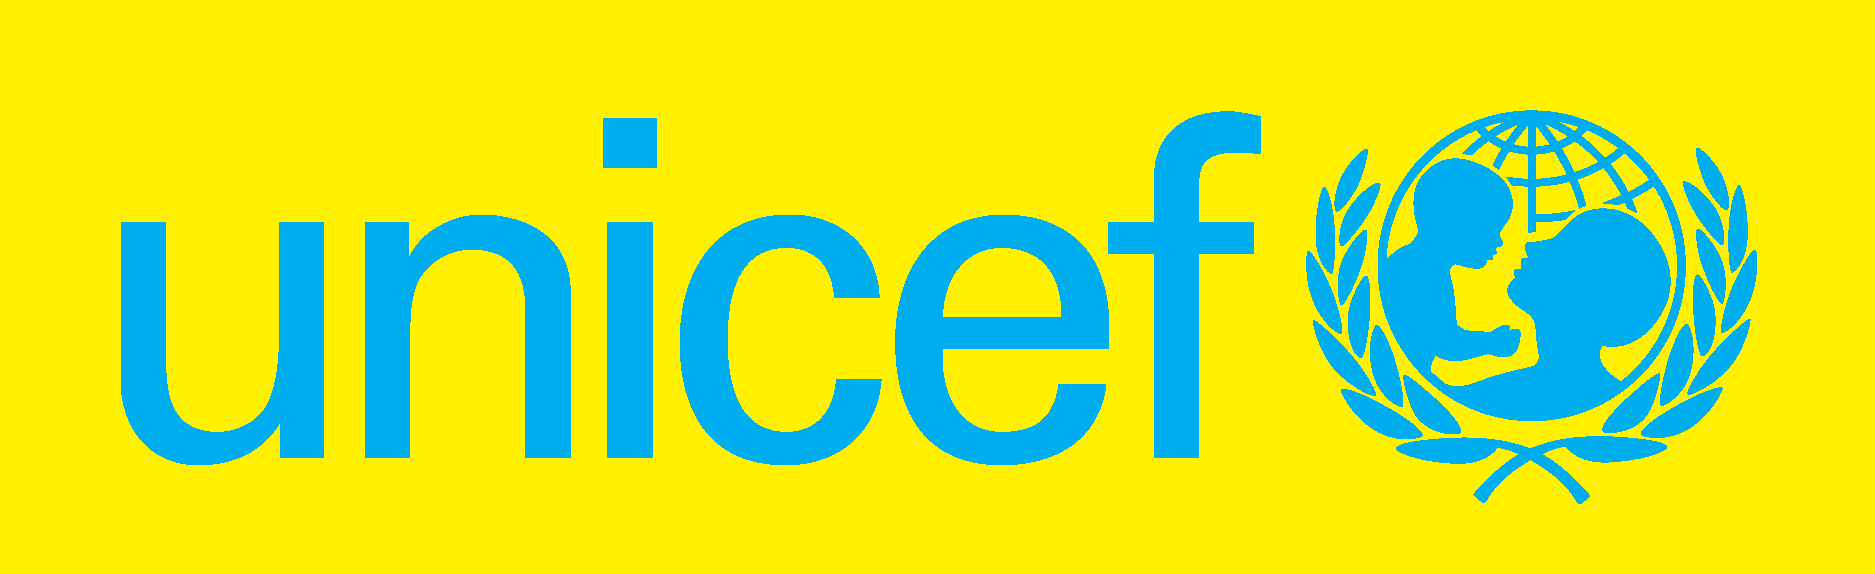 Unicef Cyan Yellow Logo Vector